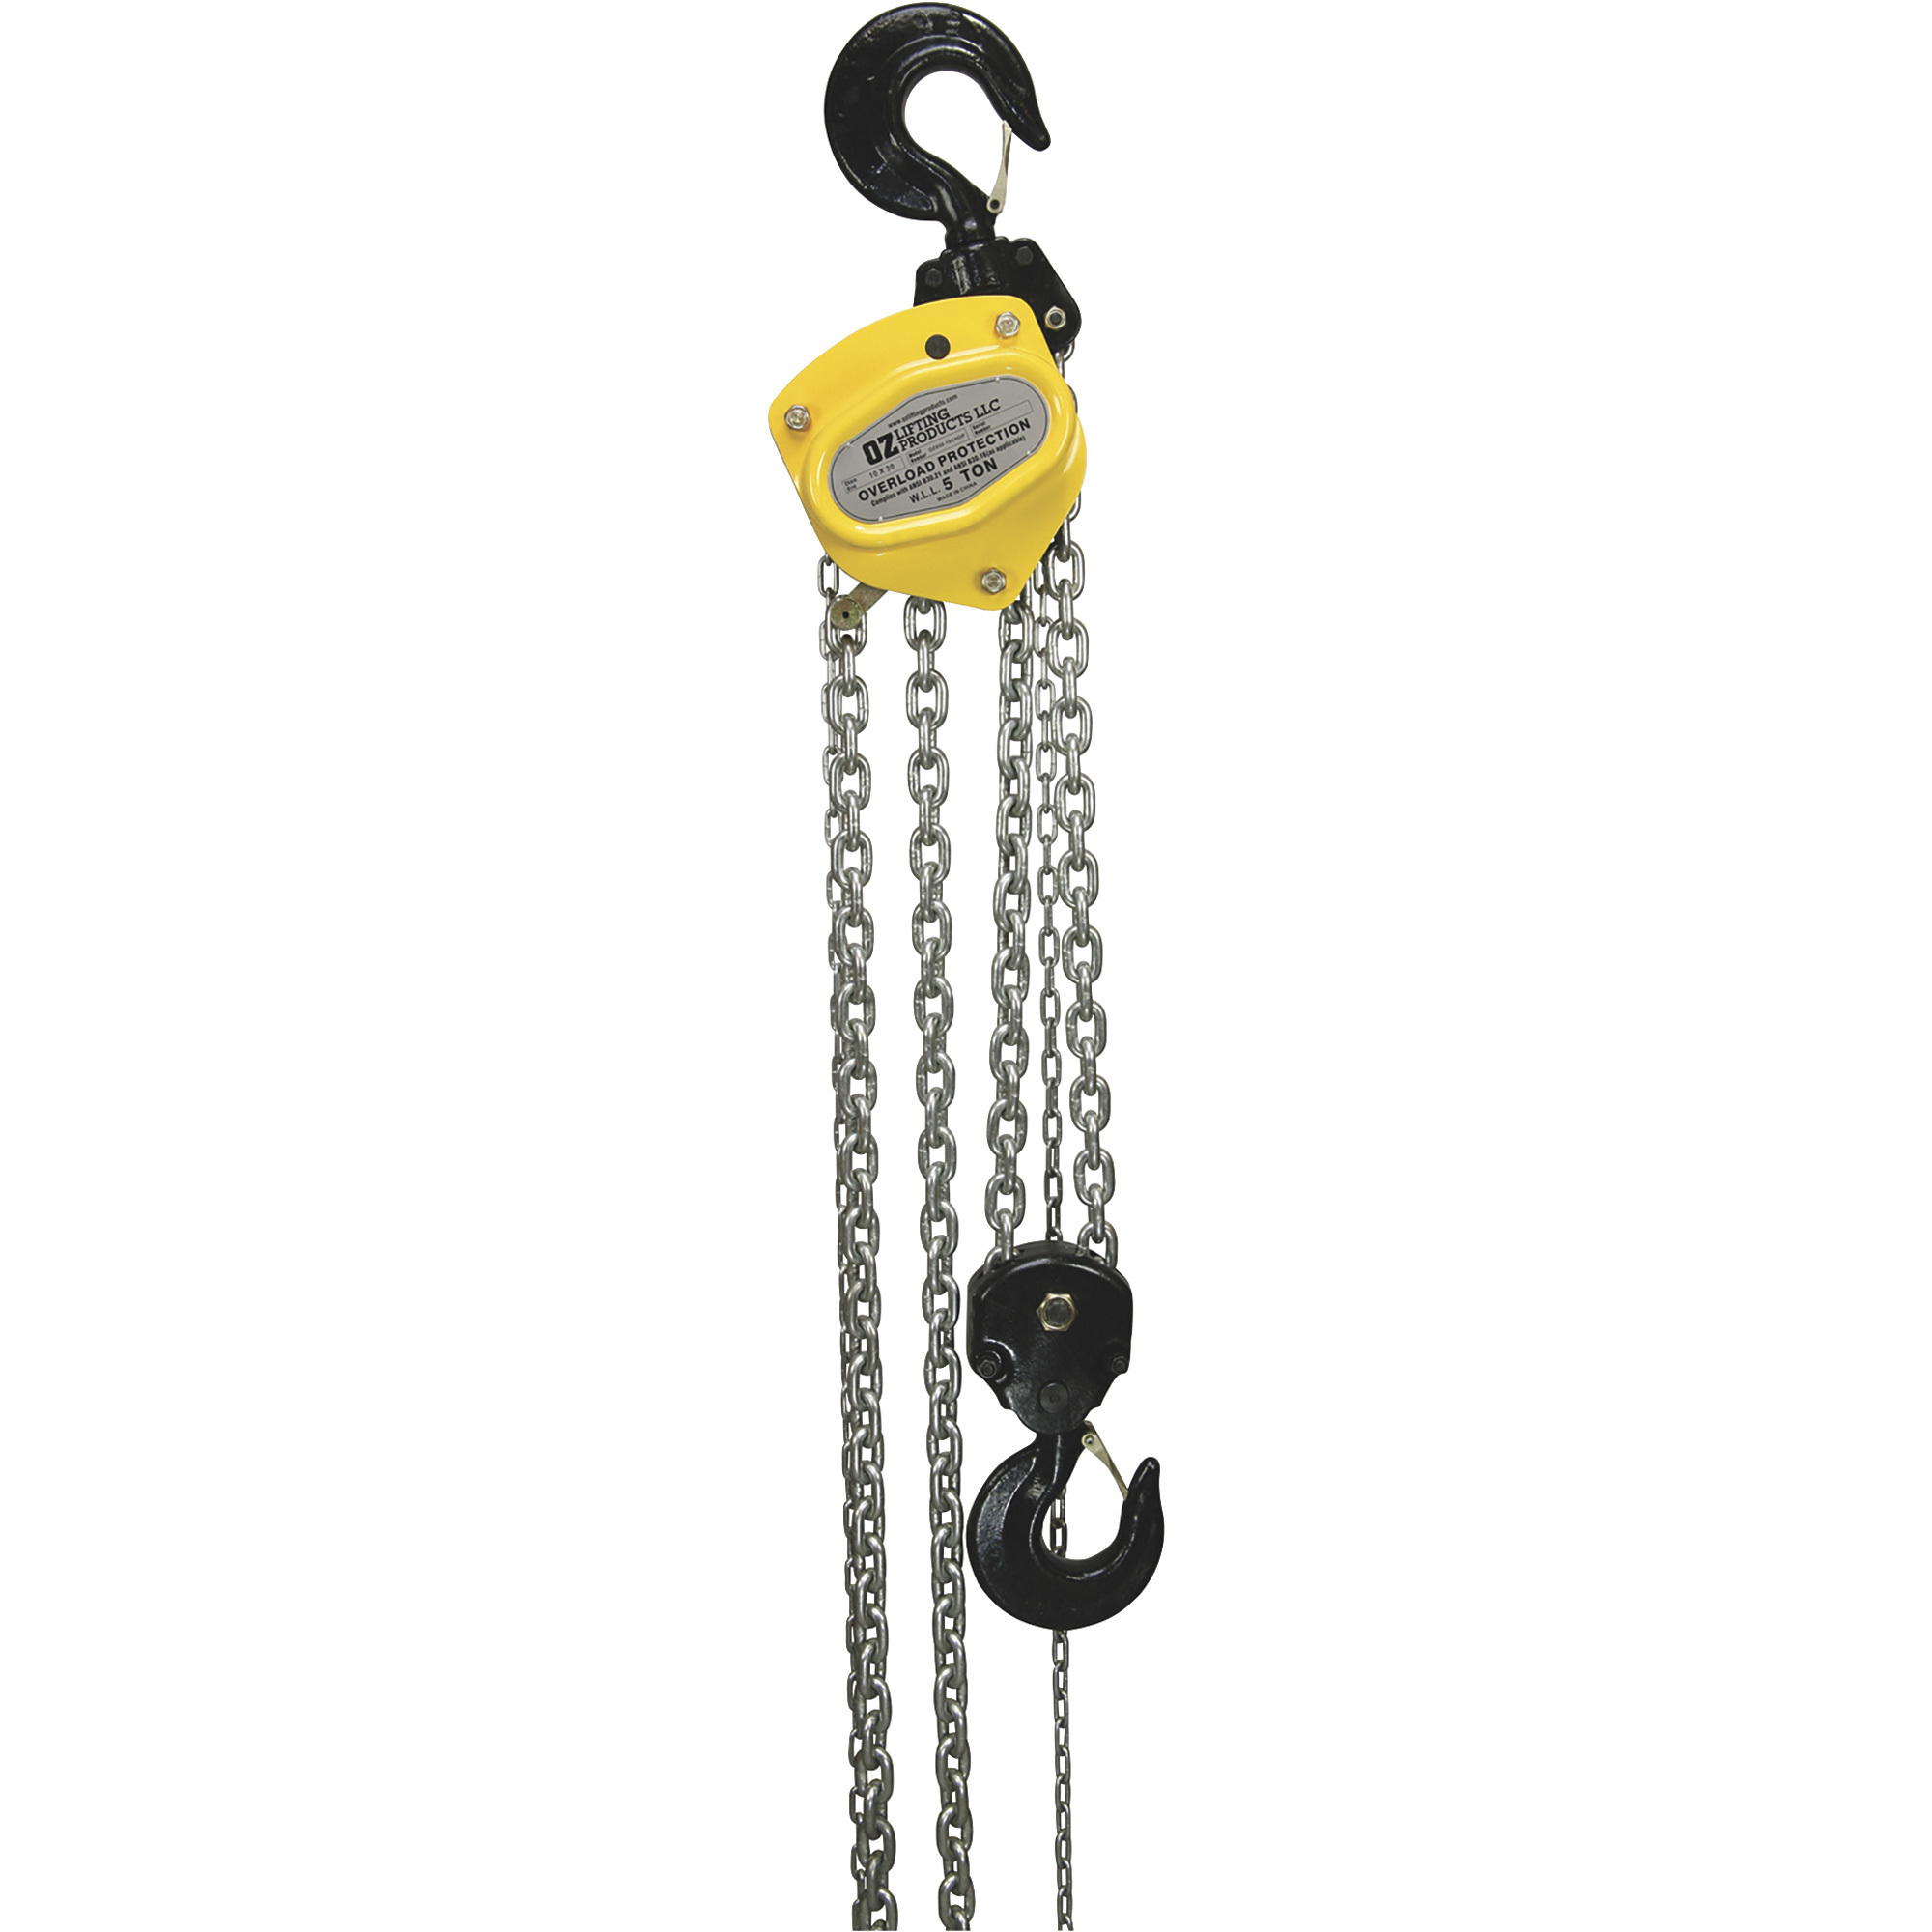 OZ Lifting Products Premium Manual Chain Hoist â 5-Ton Capacity, 15ft. Lift, Model OZ050-15CHOP